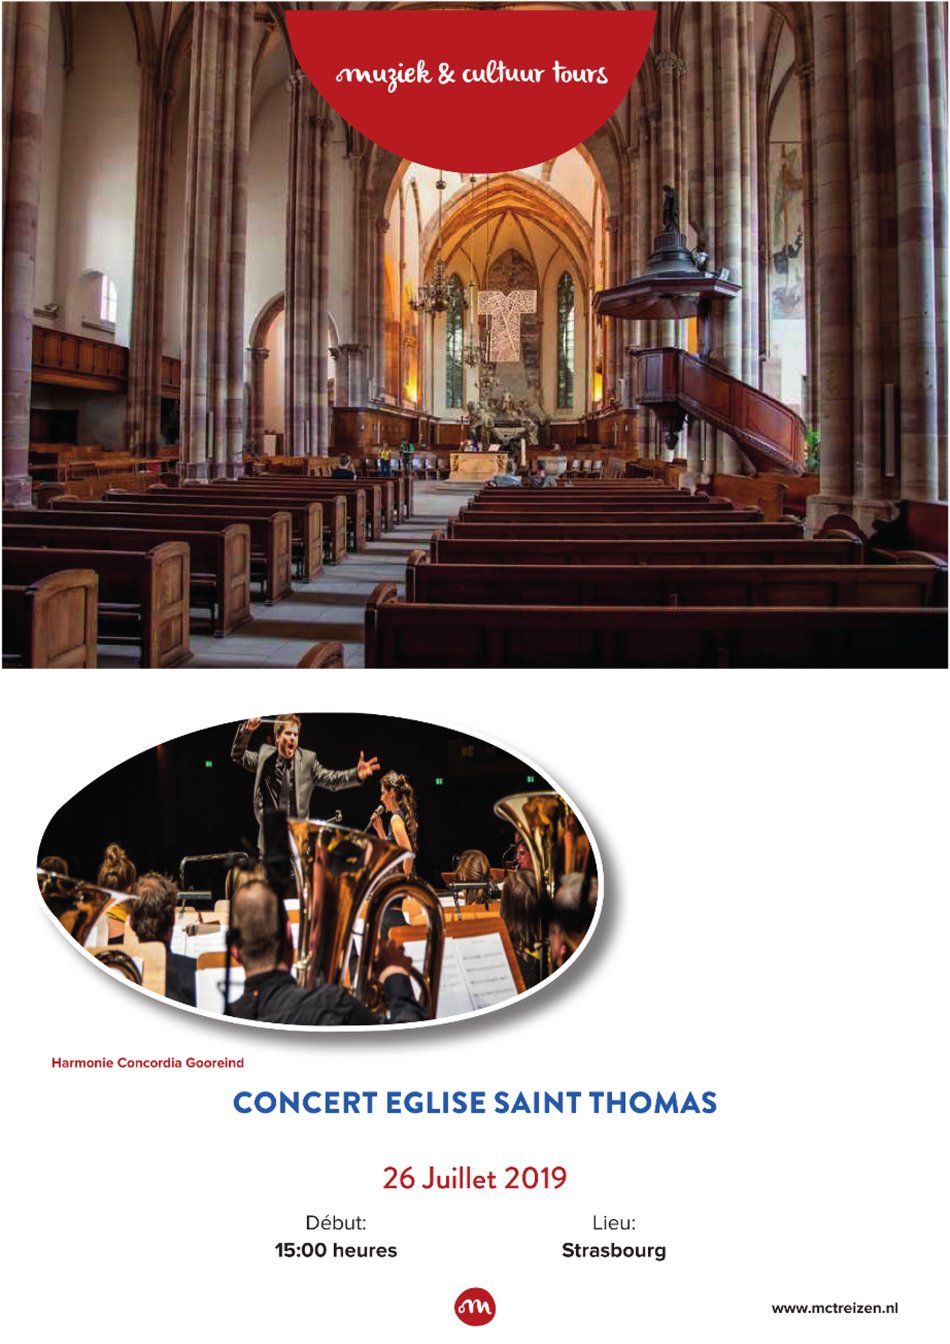 Concert Eglise Saint Thomas